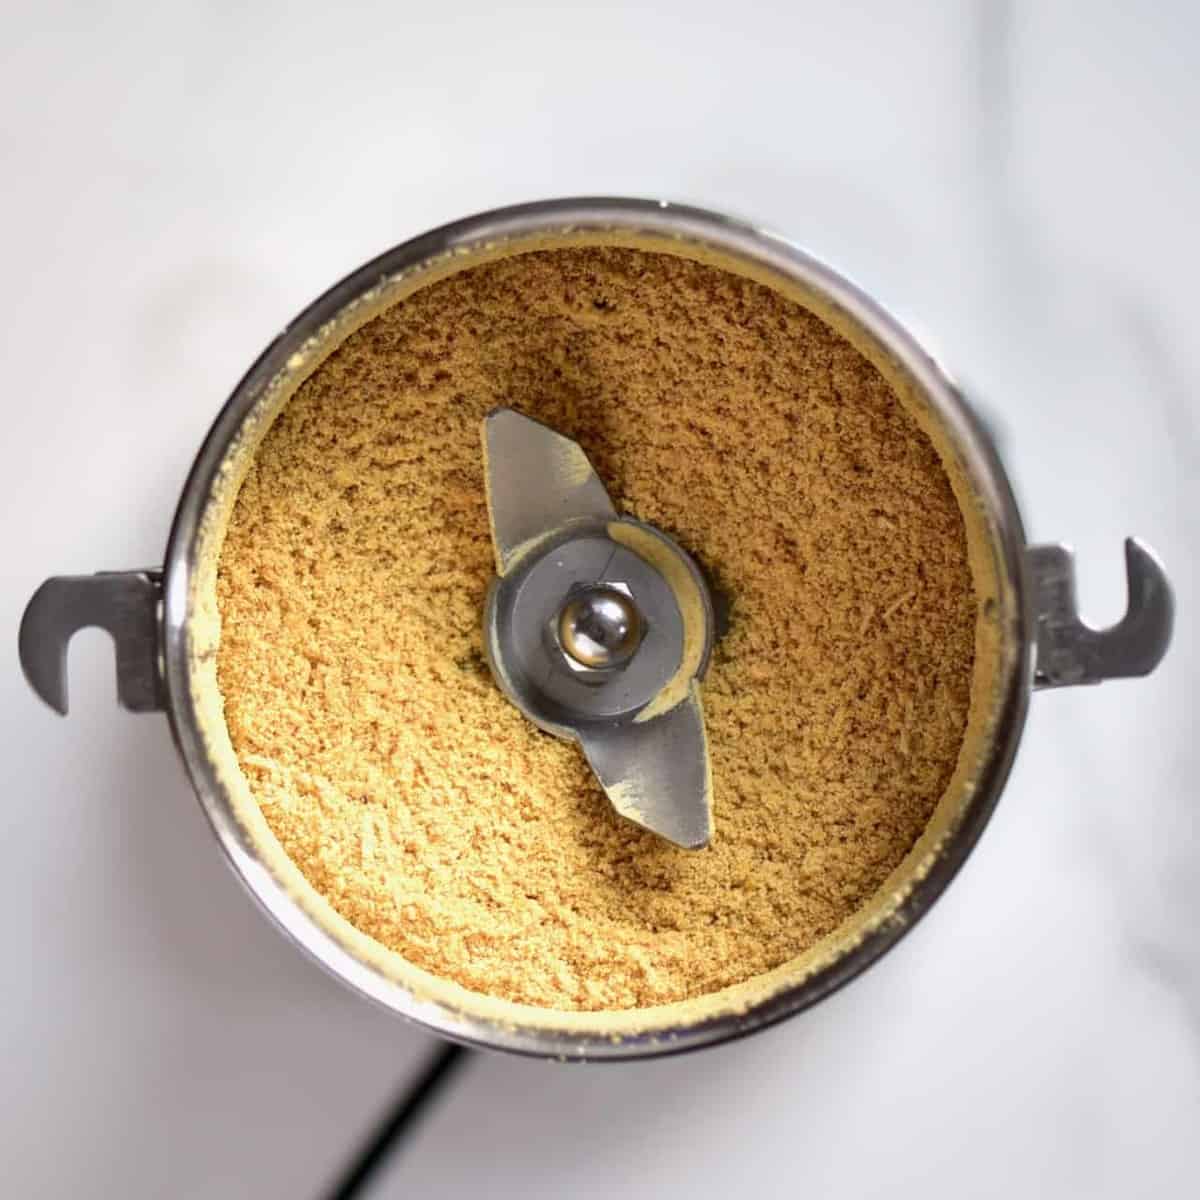 seed powder in spice grinder